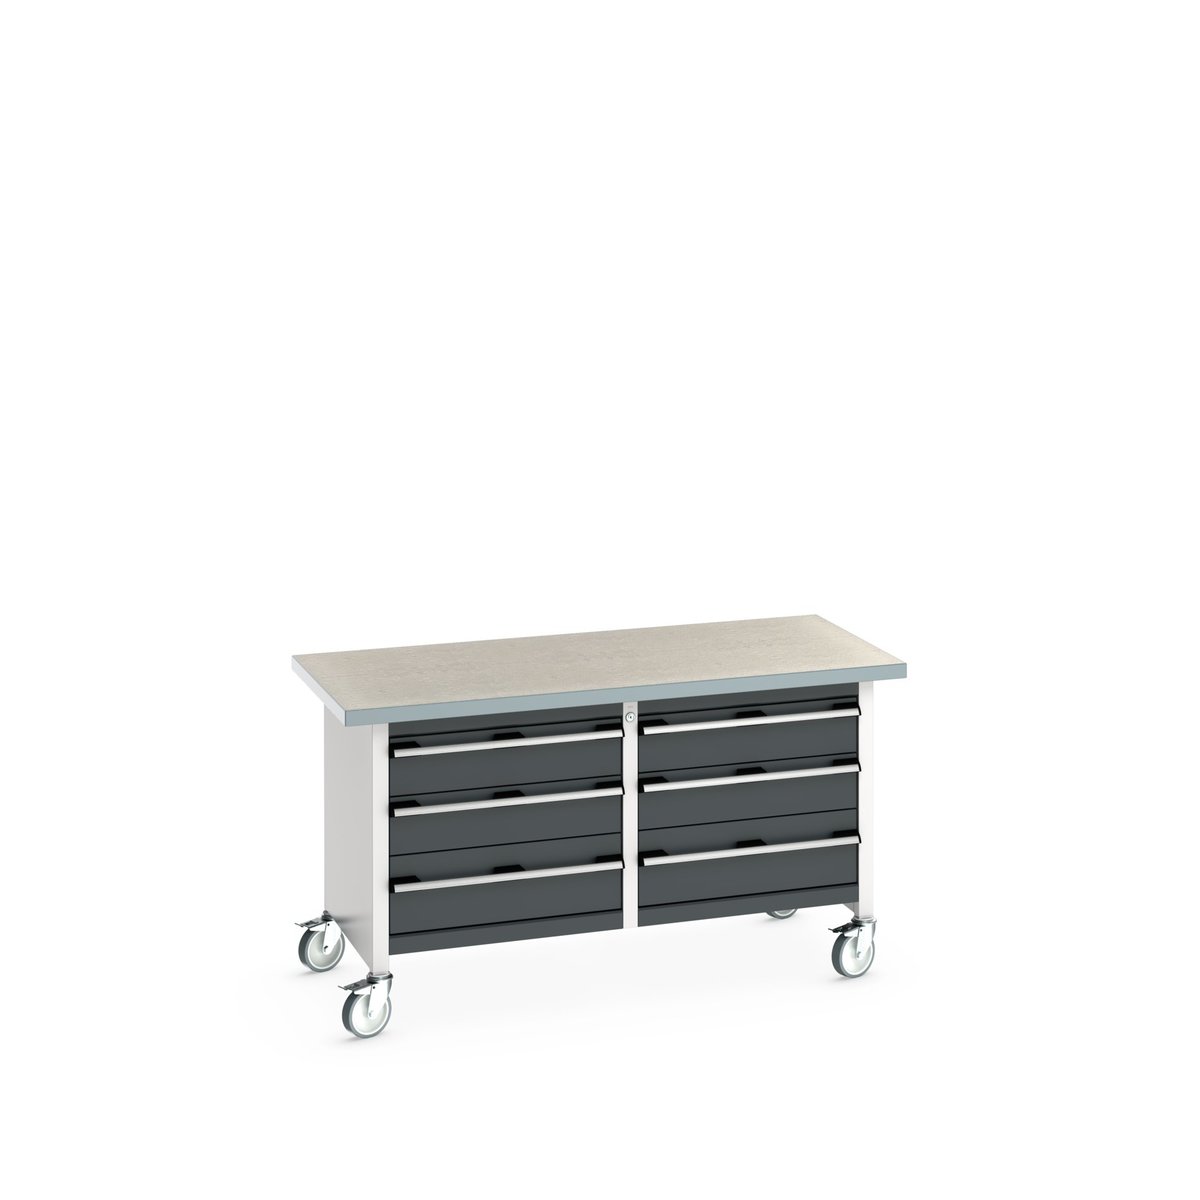 41002108. - cubio mobile storage bench (lino)